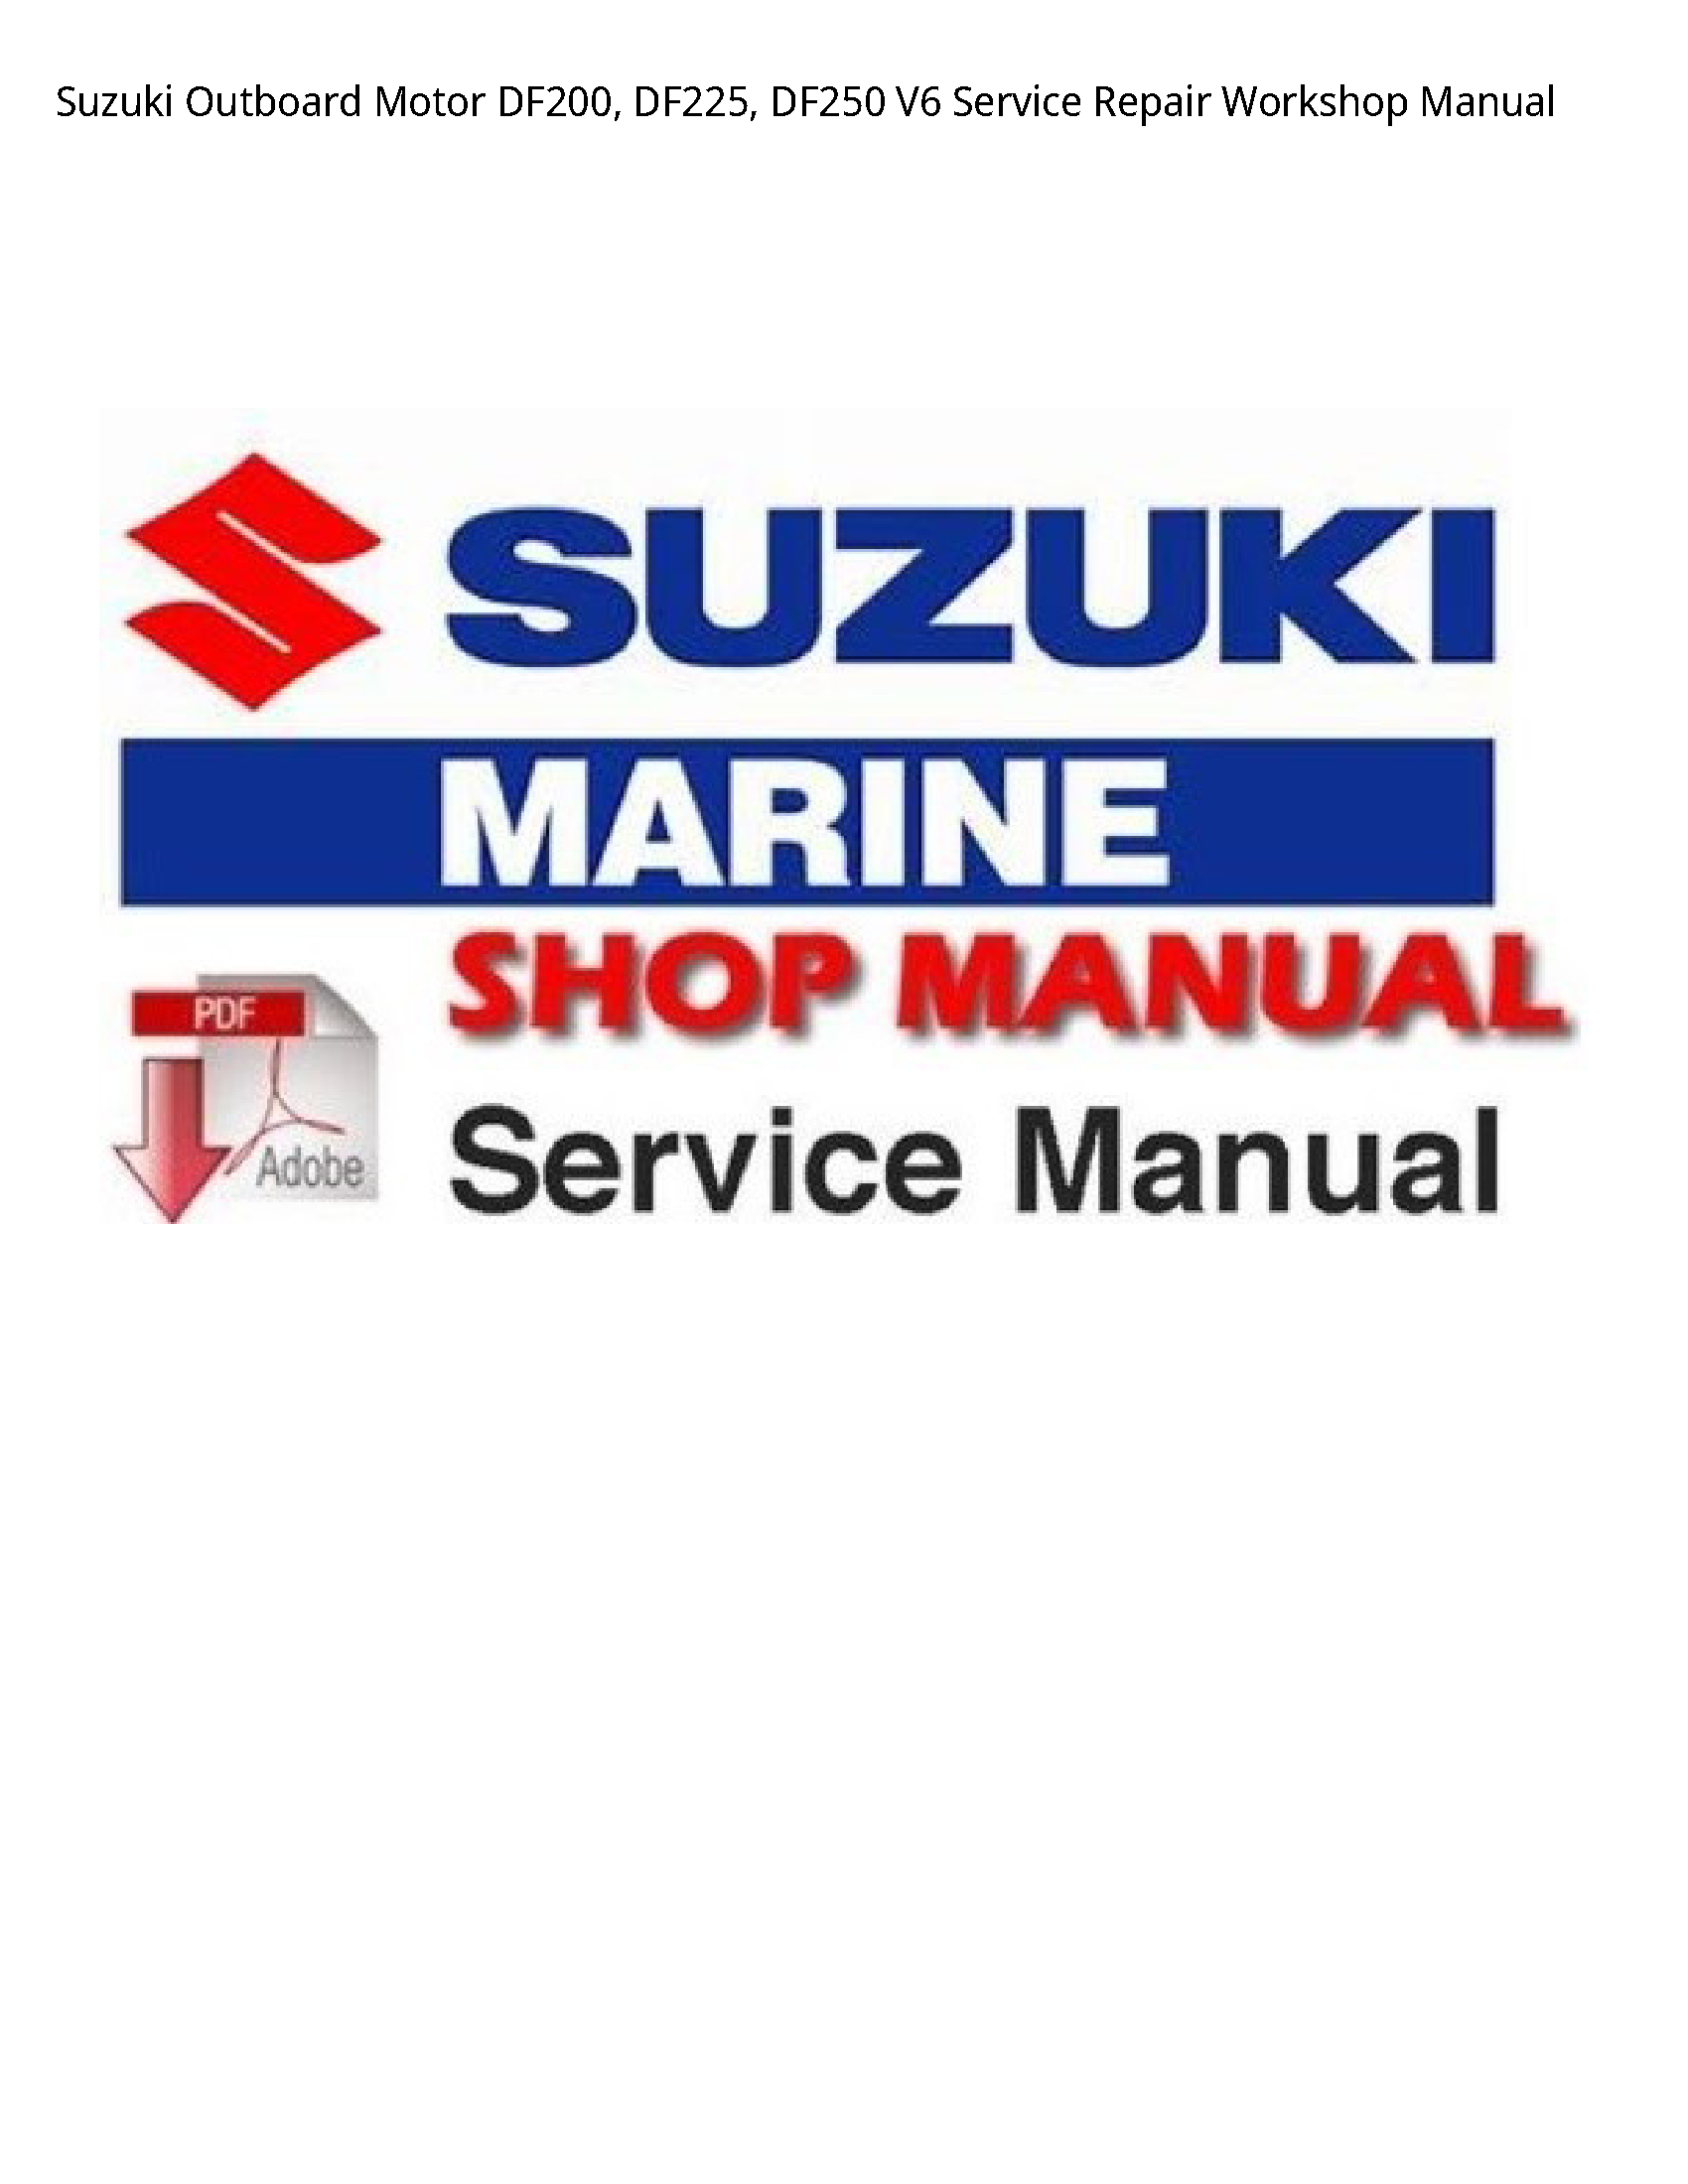 Suzuki DF200 Outboard Motor manual